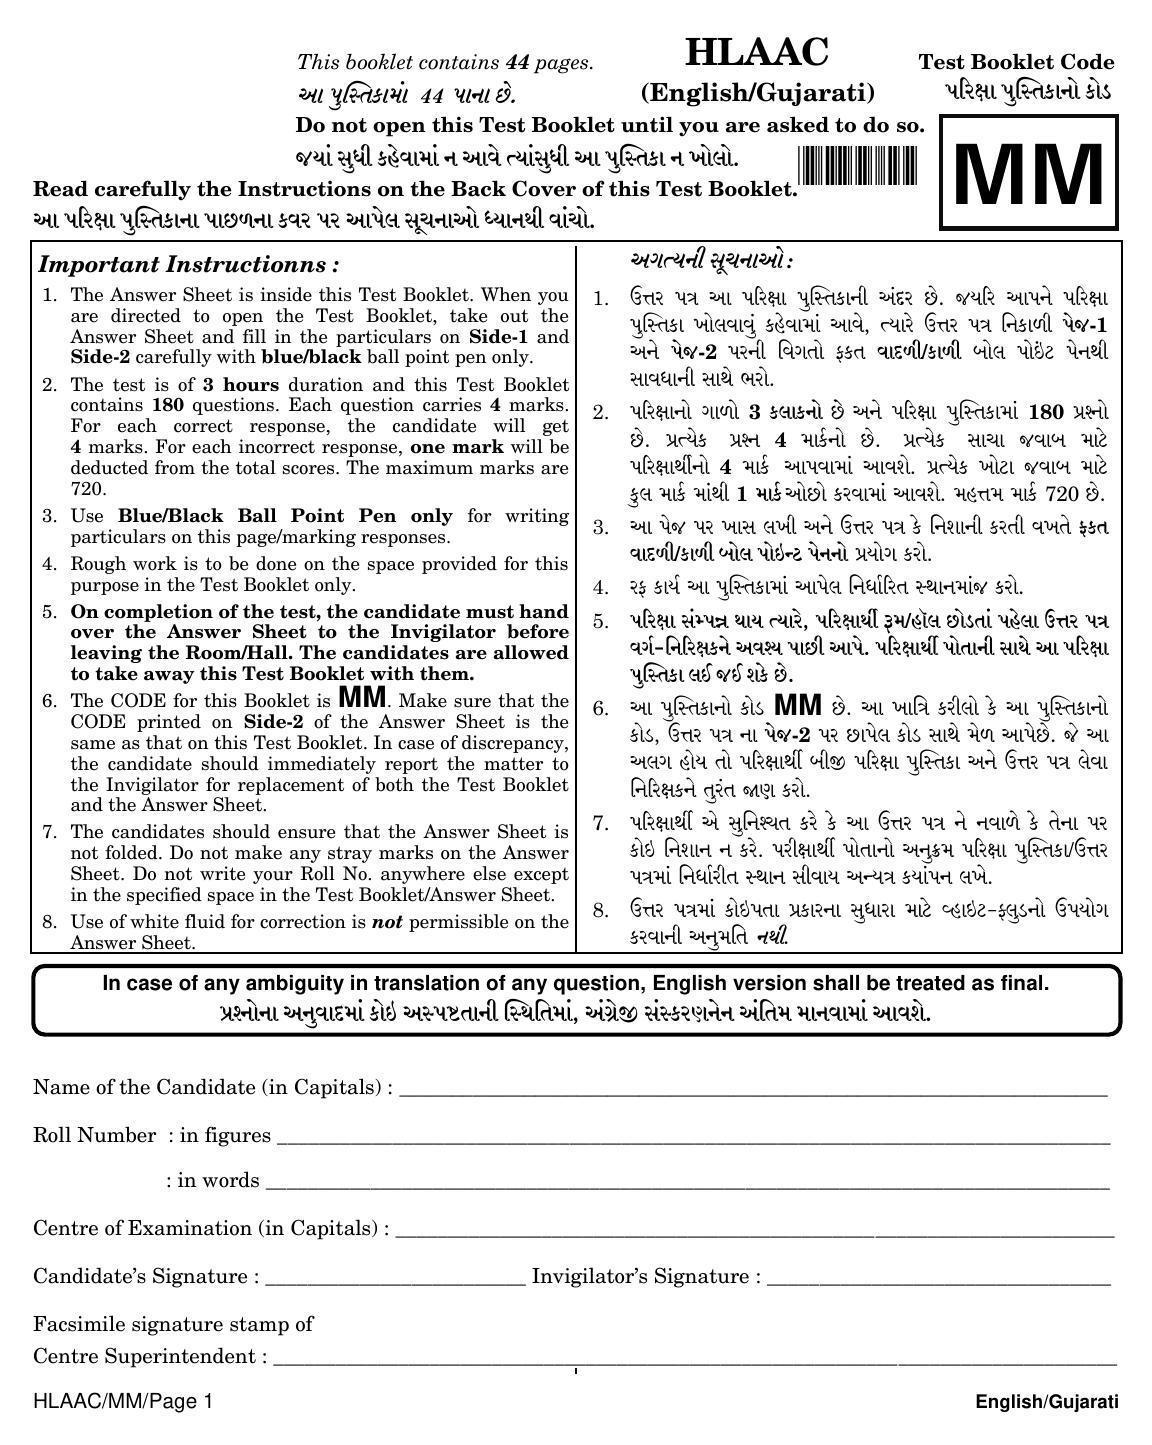 NEET Gujarati MM 2018 Question Paper - Page 1